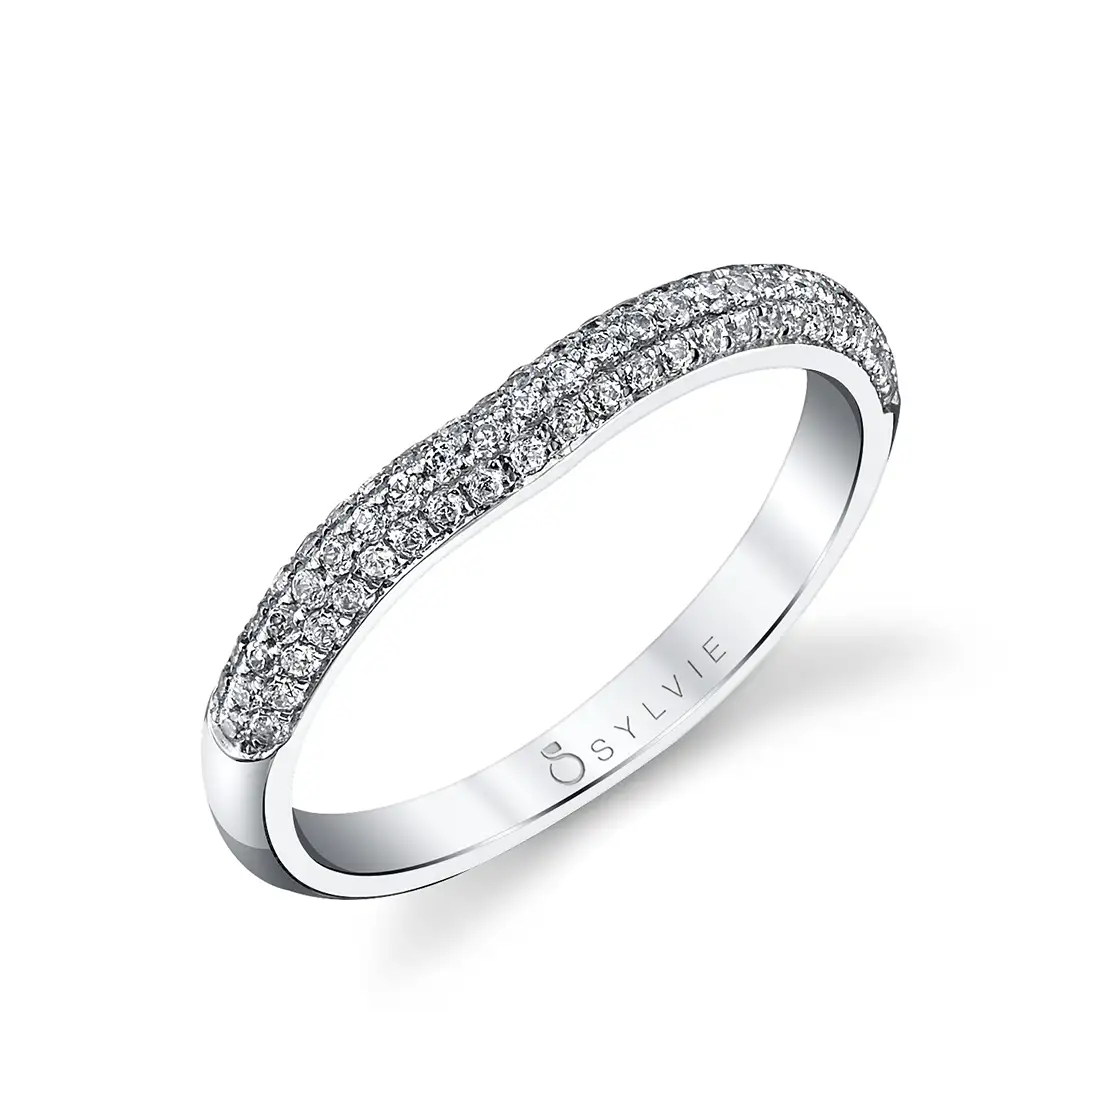 AmaranTeen High Polish 316L Stainless Steel Anniversary Wedding & Engagement Ring 